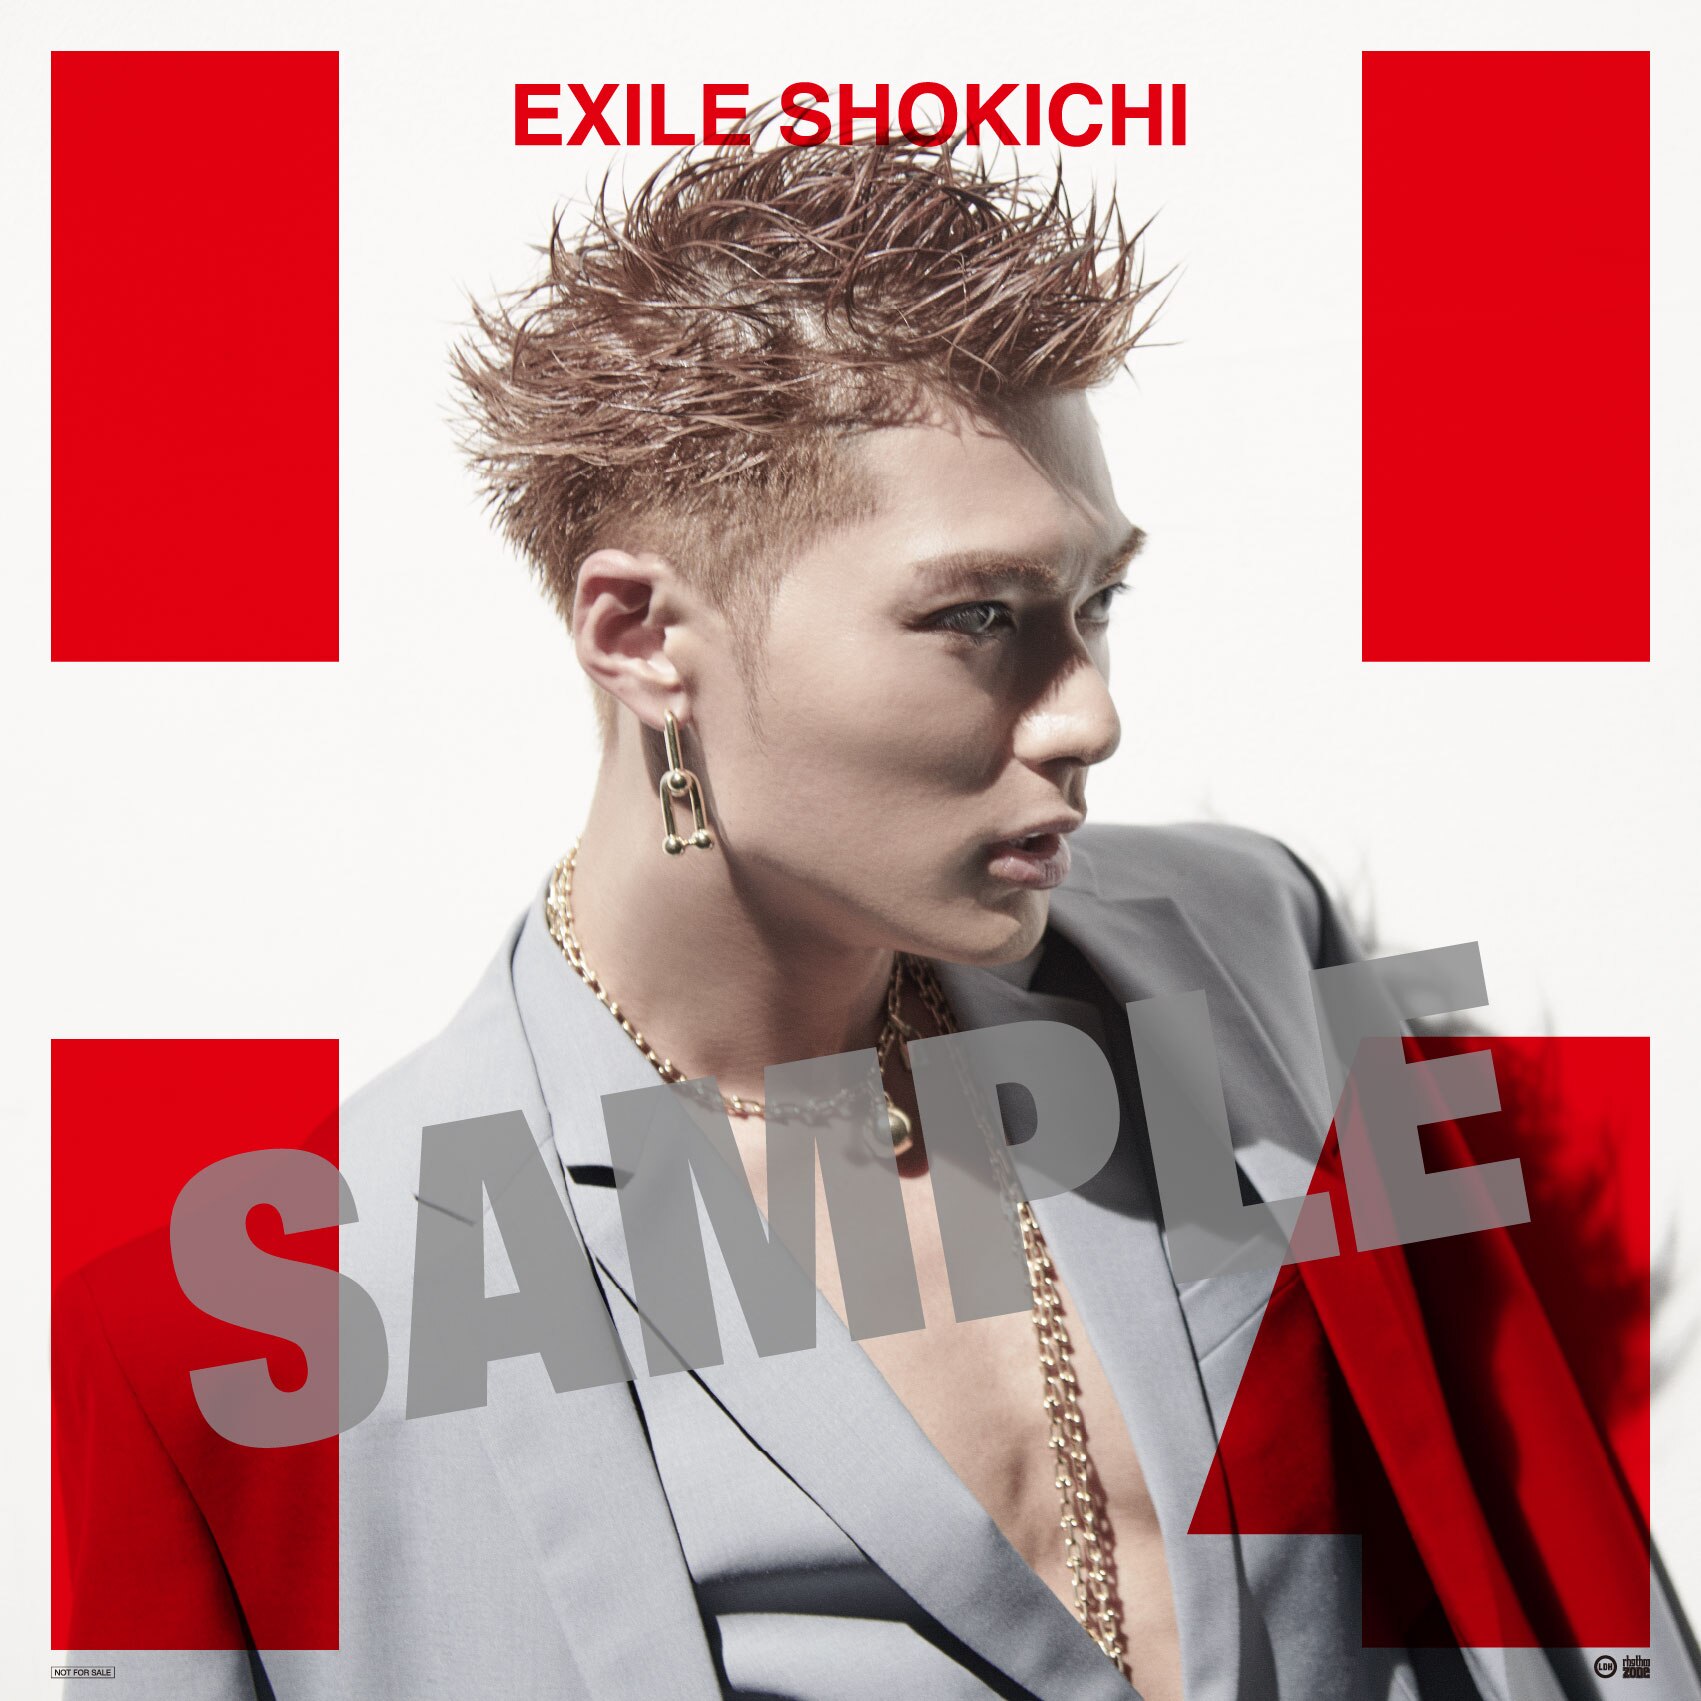 EXILE SHOKICHI セット - 国内アーティスト